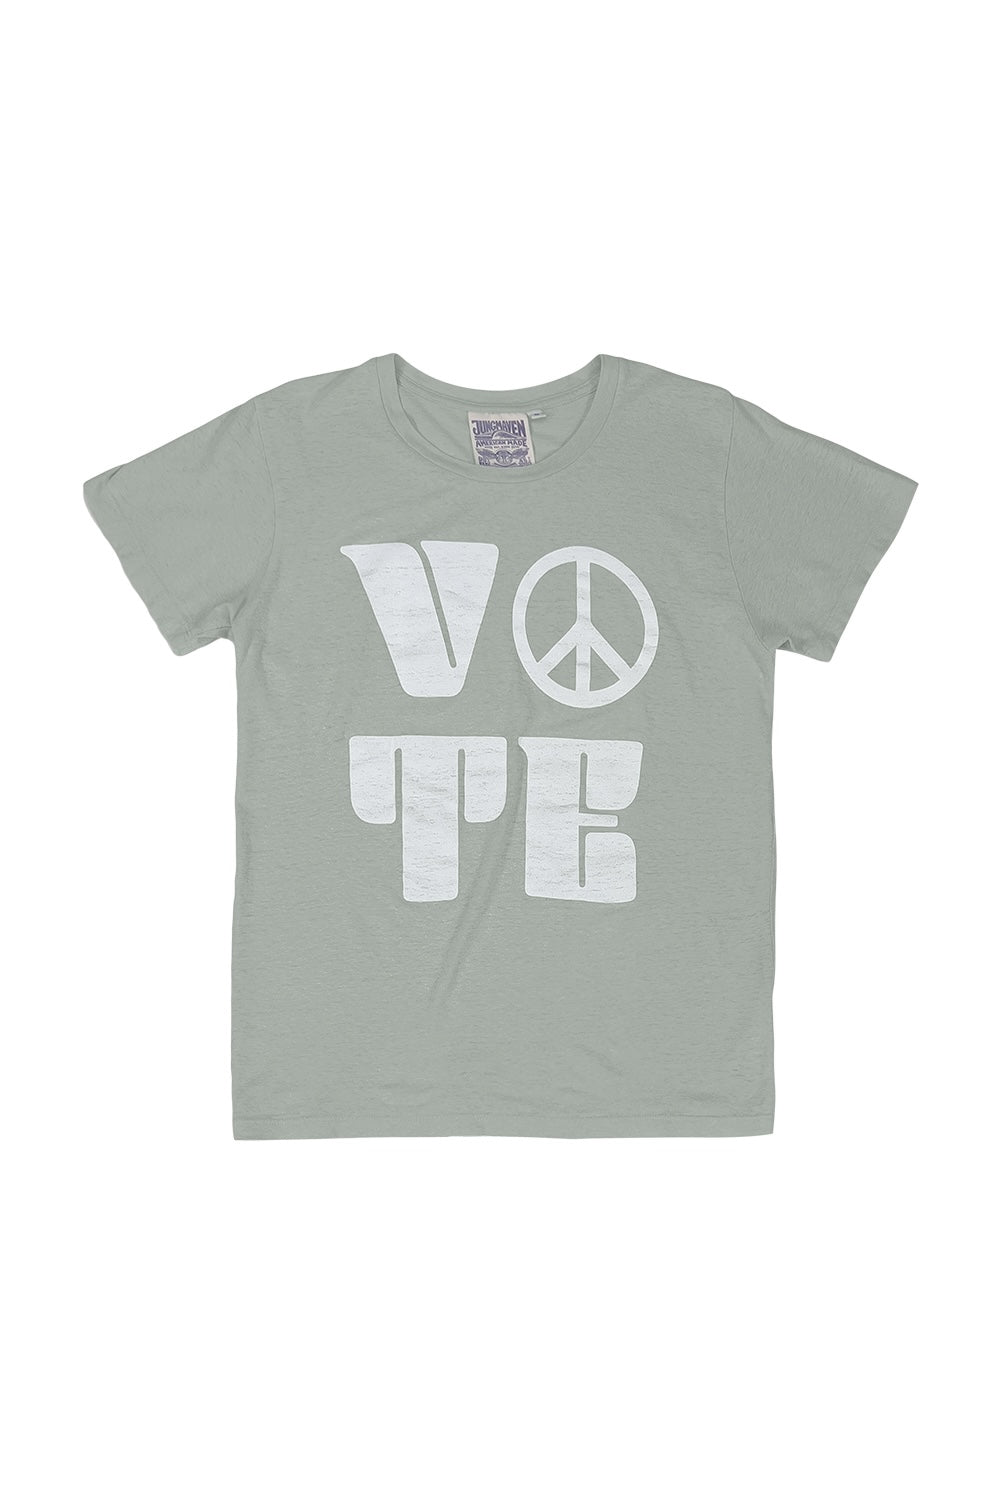 Vote Peace Lorel Tee | Jungmaven Hemp Clothing & Accessories / Color:Seafoam Green